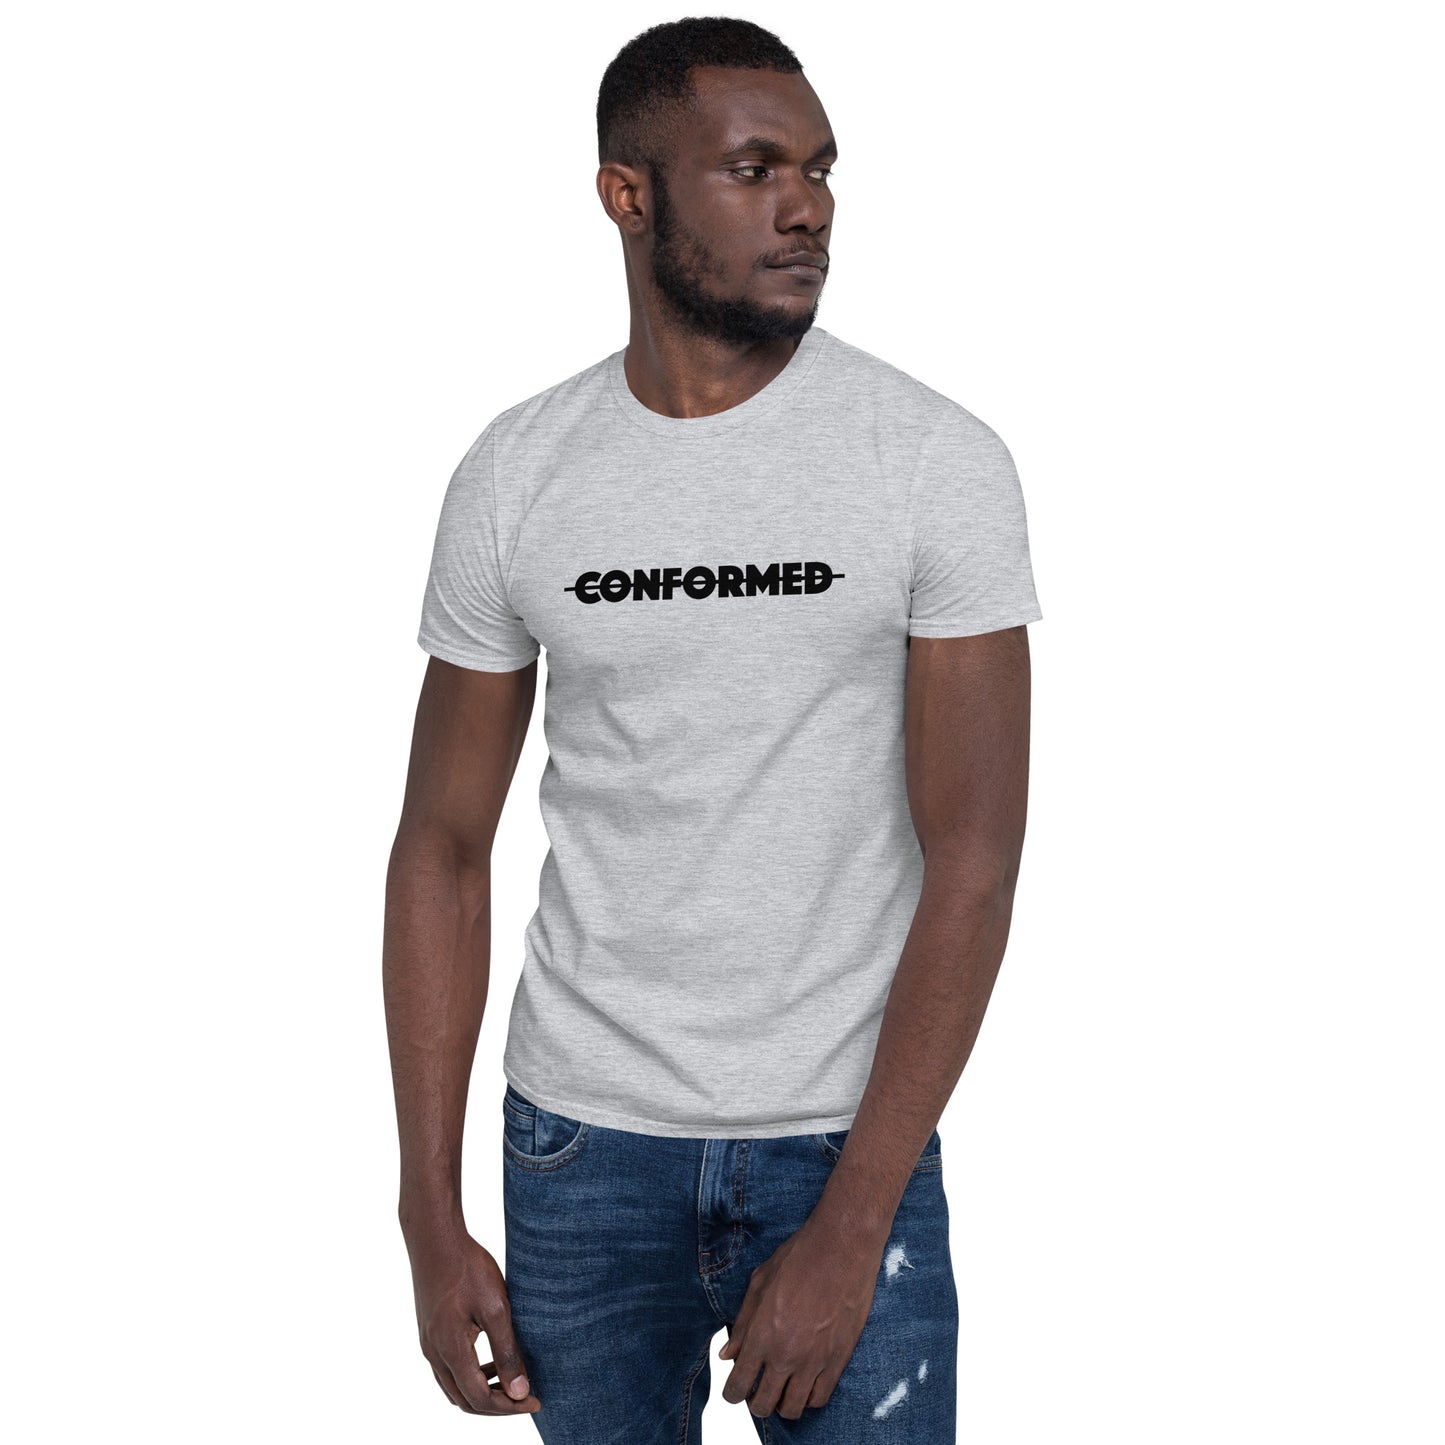 TRANSFORMED - Short-Sleeve Unisex T-Shirt